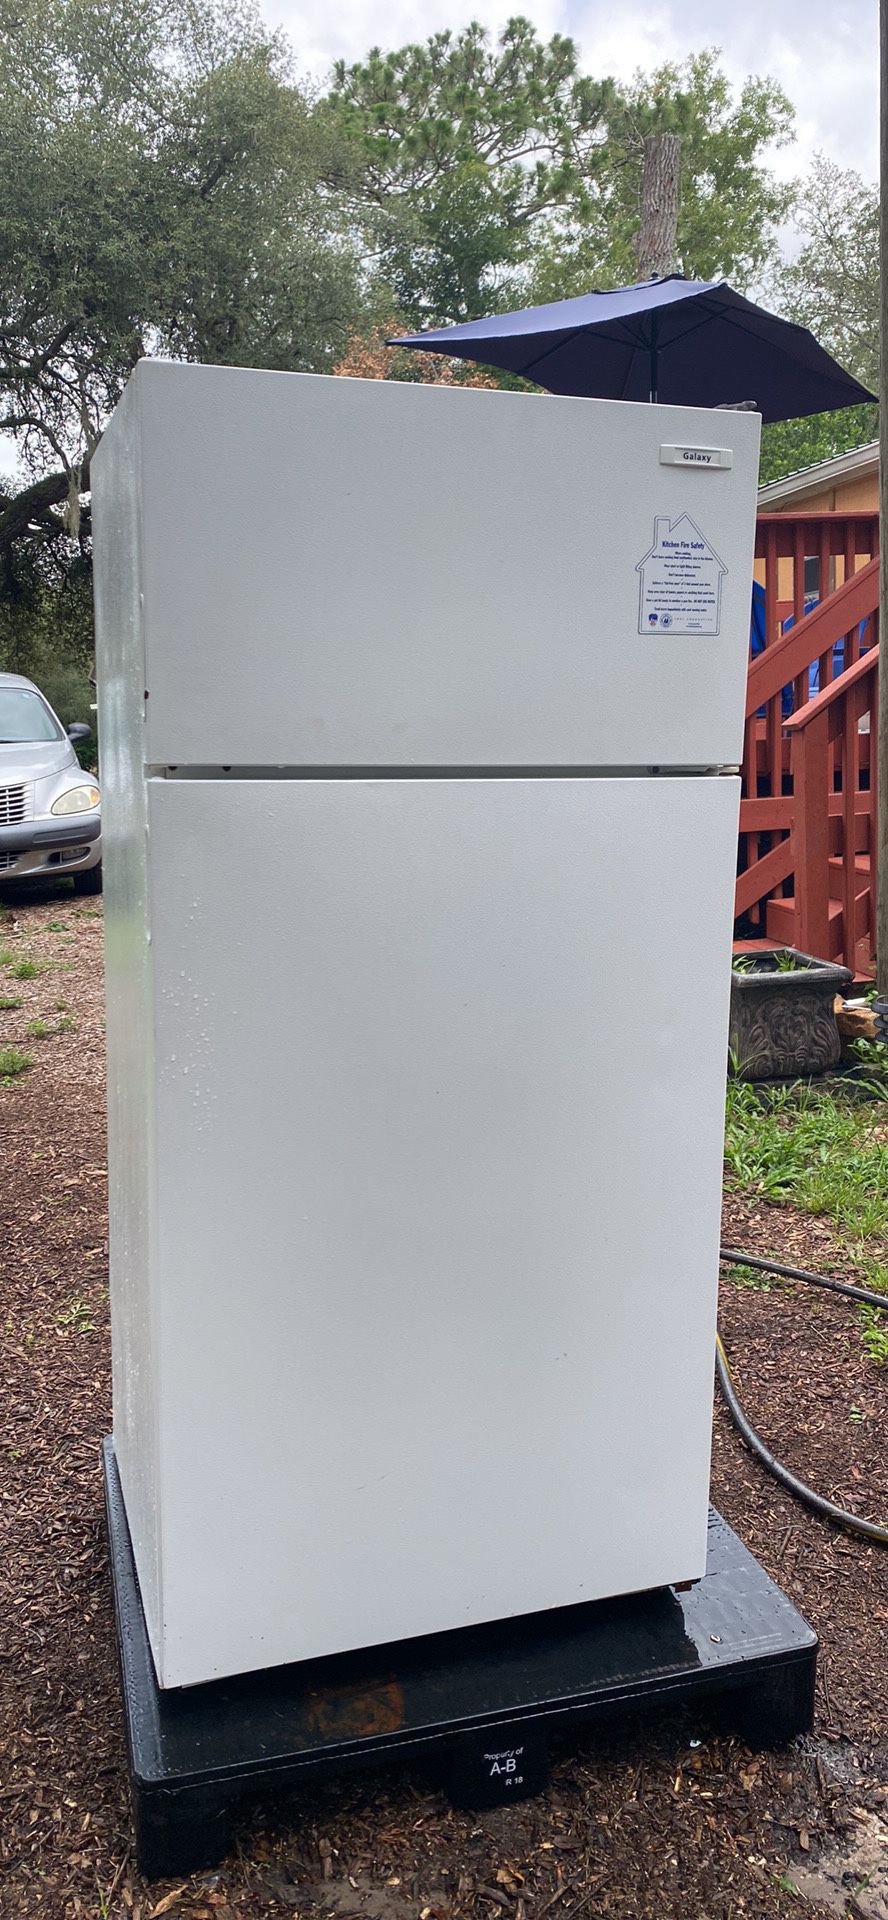 Galaxy Refrigerator Made By Sears Roebuck & Co. 